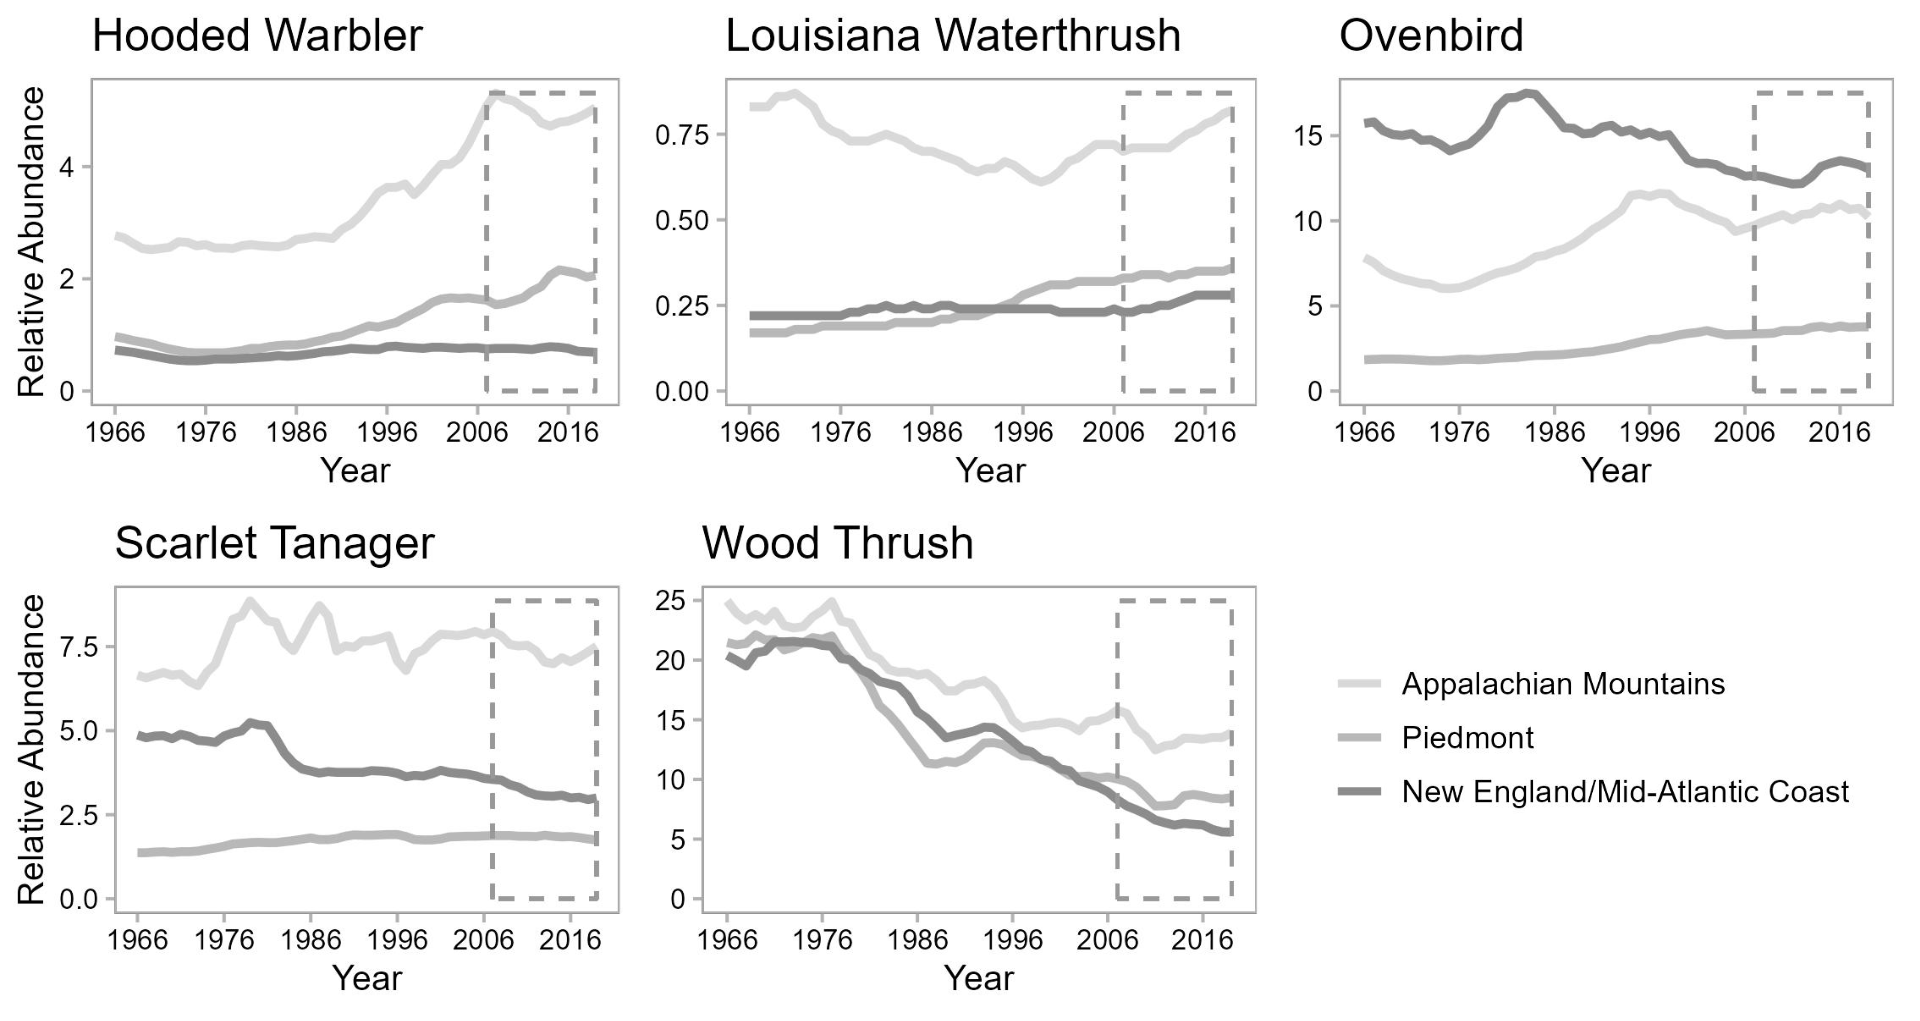 Five line graphs depict relative abundance estimates for 5 forest interior bird species